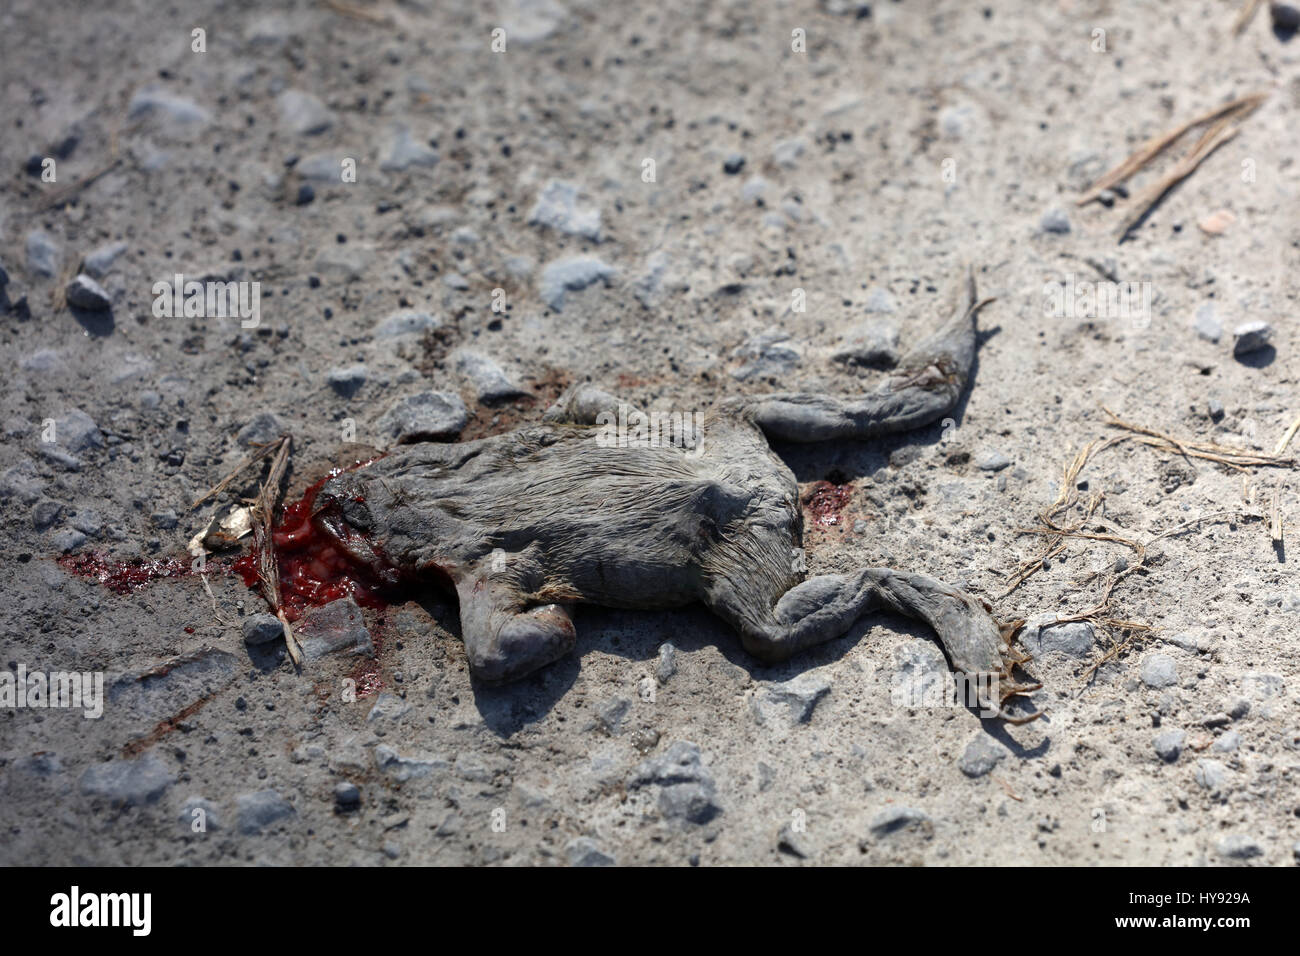 Tote Kröte bei der Krötenwanderung Stock Photo